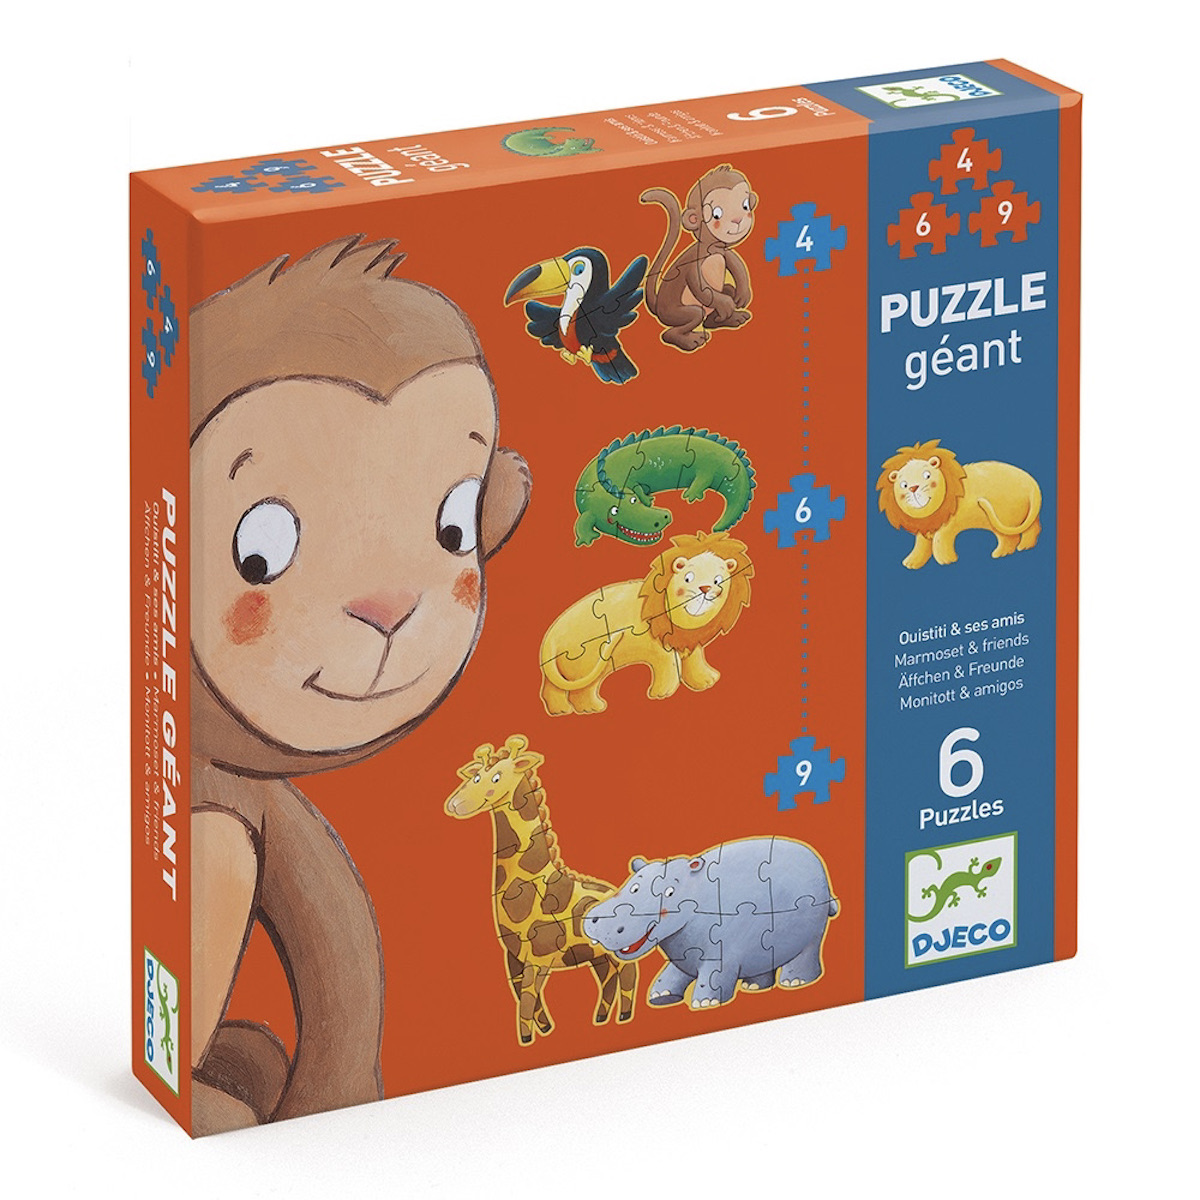 Djeco Animals Puzzle Duo Matching Activity - Destination Baby & Kids